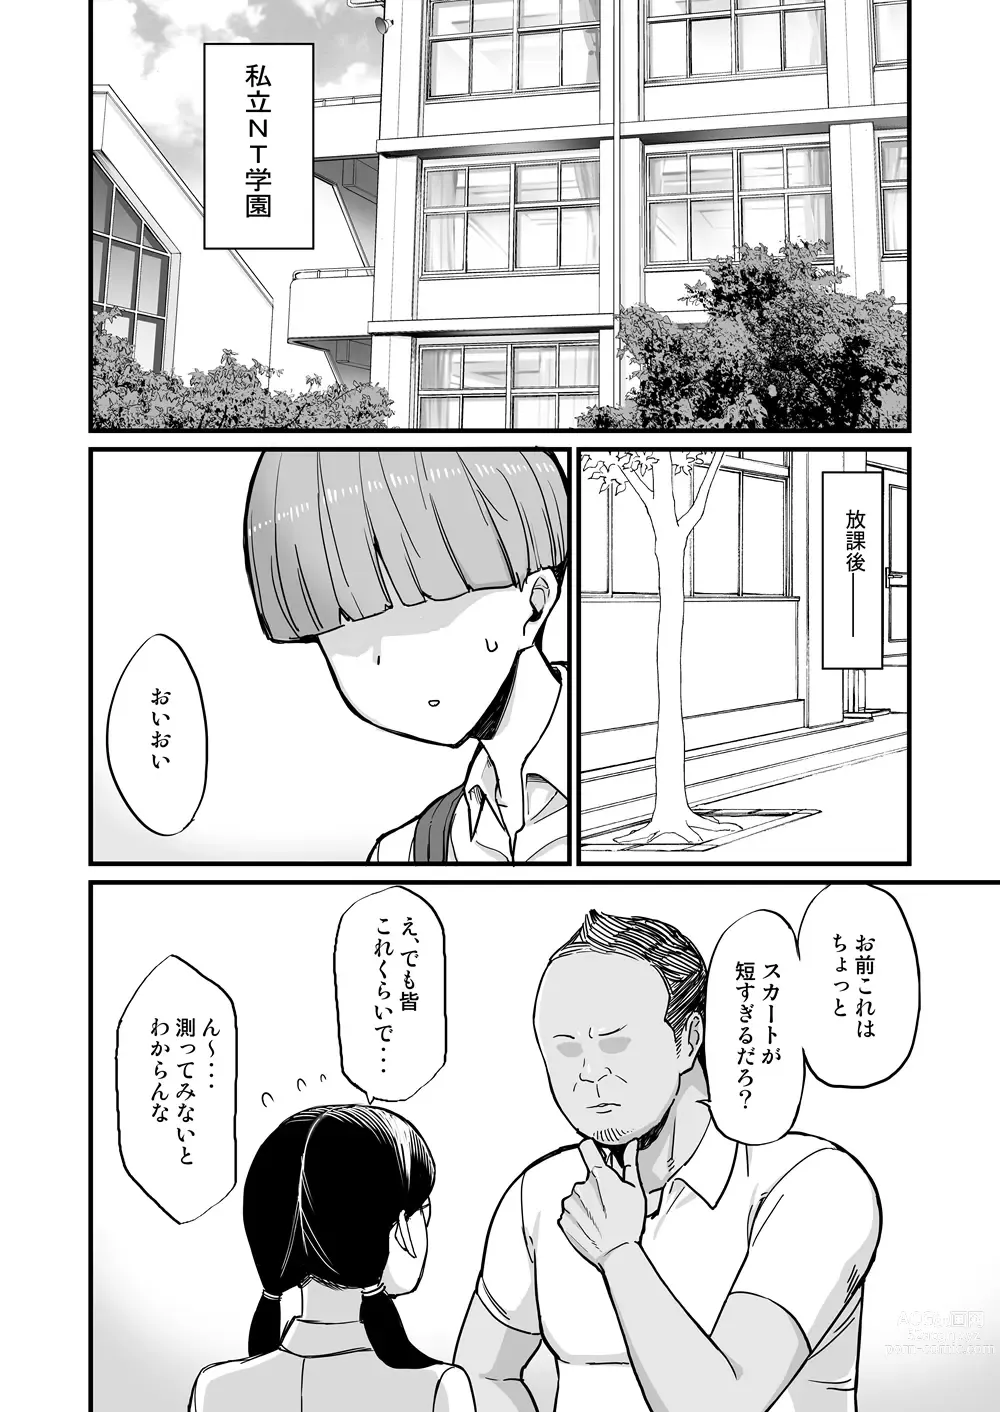 Page 3 of doujinshi NTR Fuuki Iin Mio